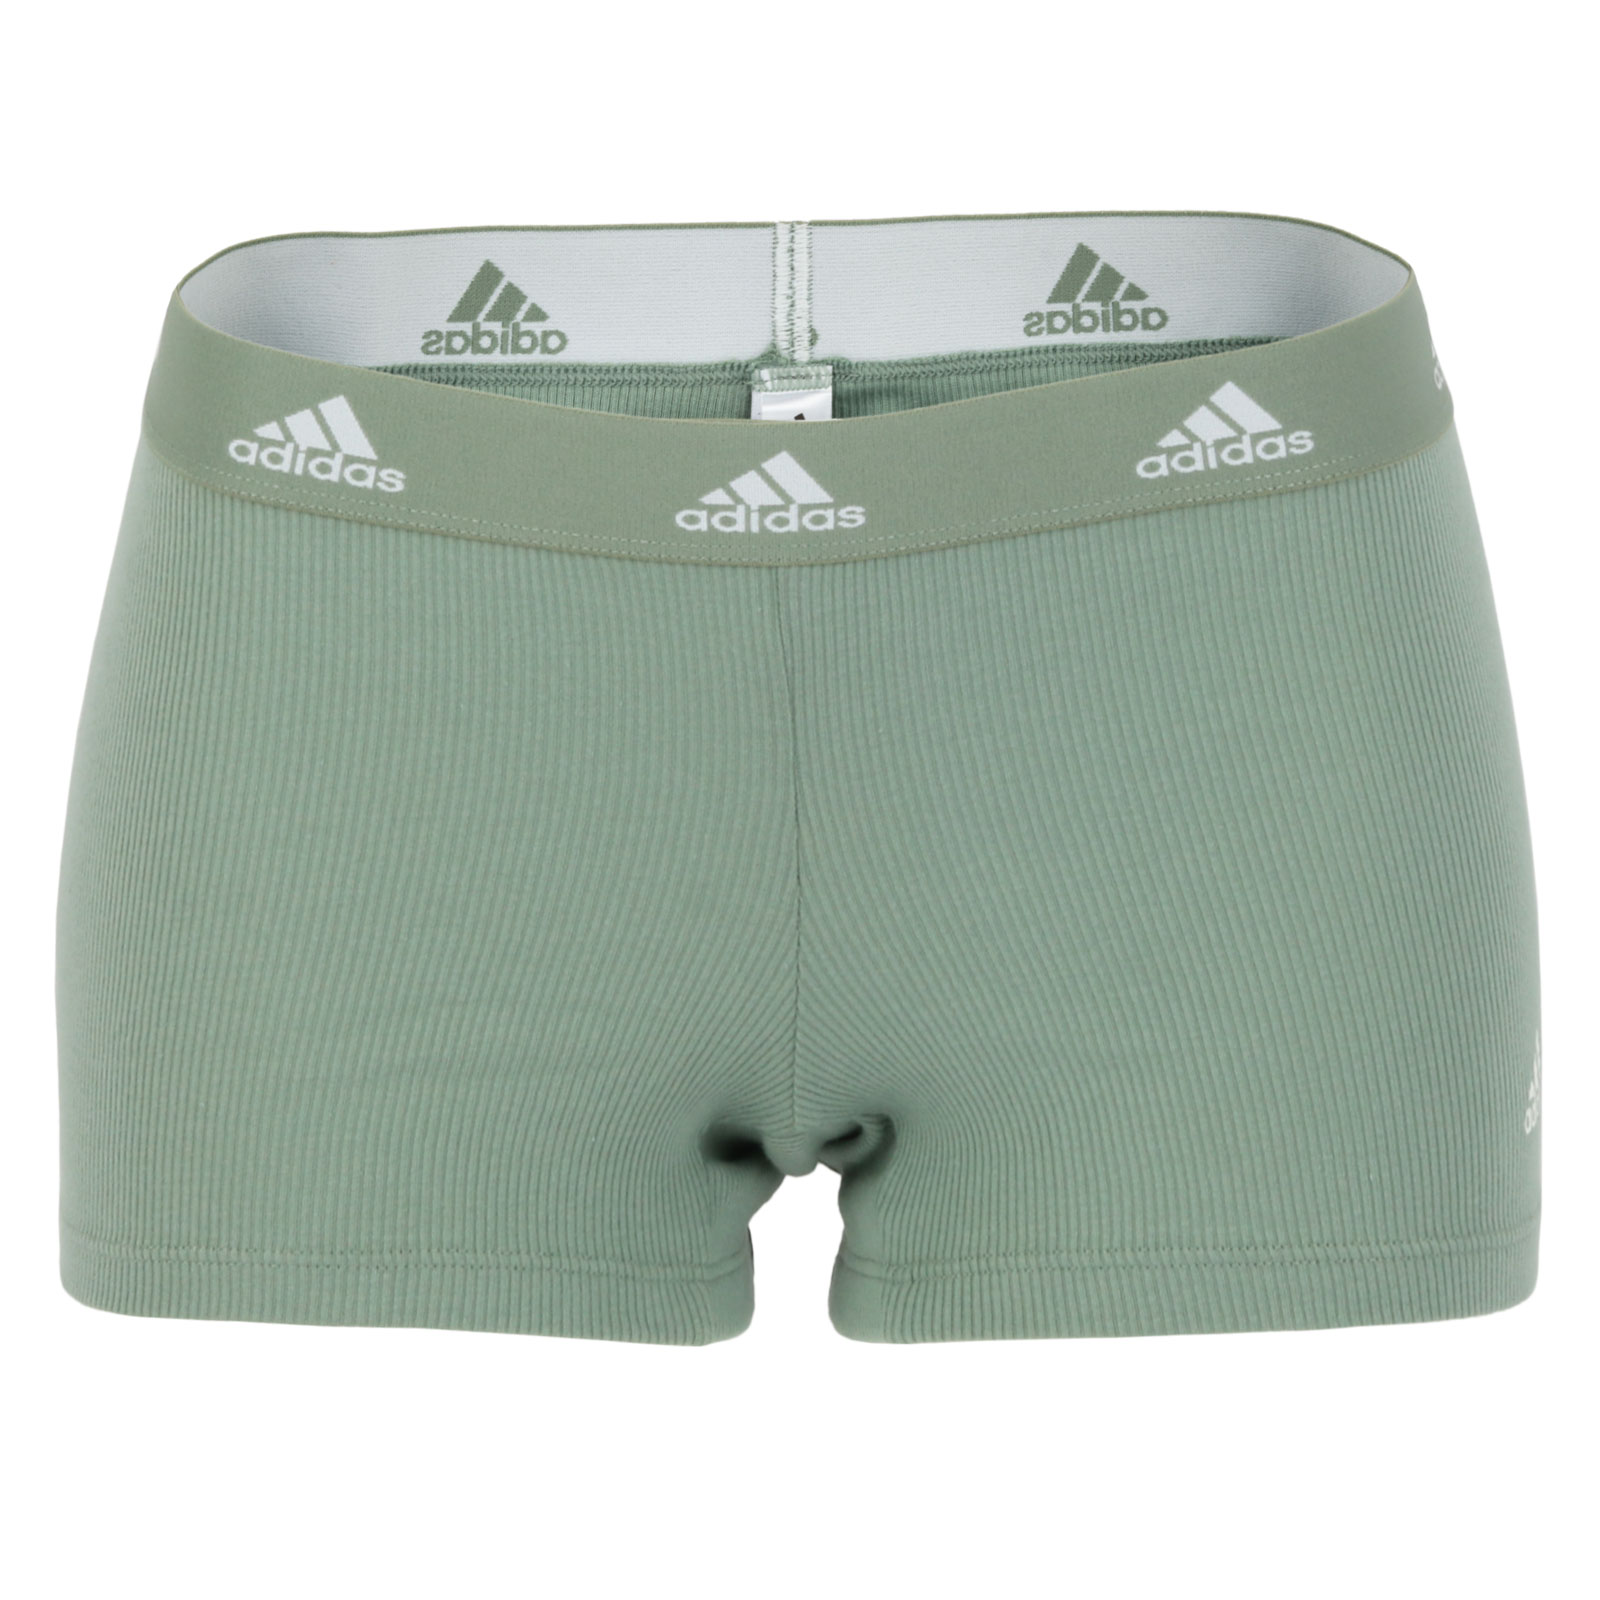 https://images.bike24.com/i/mb/88/2a/cd/adidas-sports-underwear-womens-boxer-shorts-707-olive-1477398.jpg